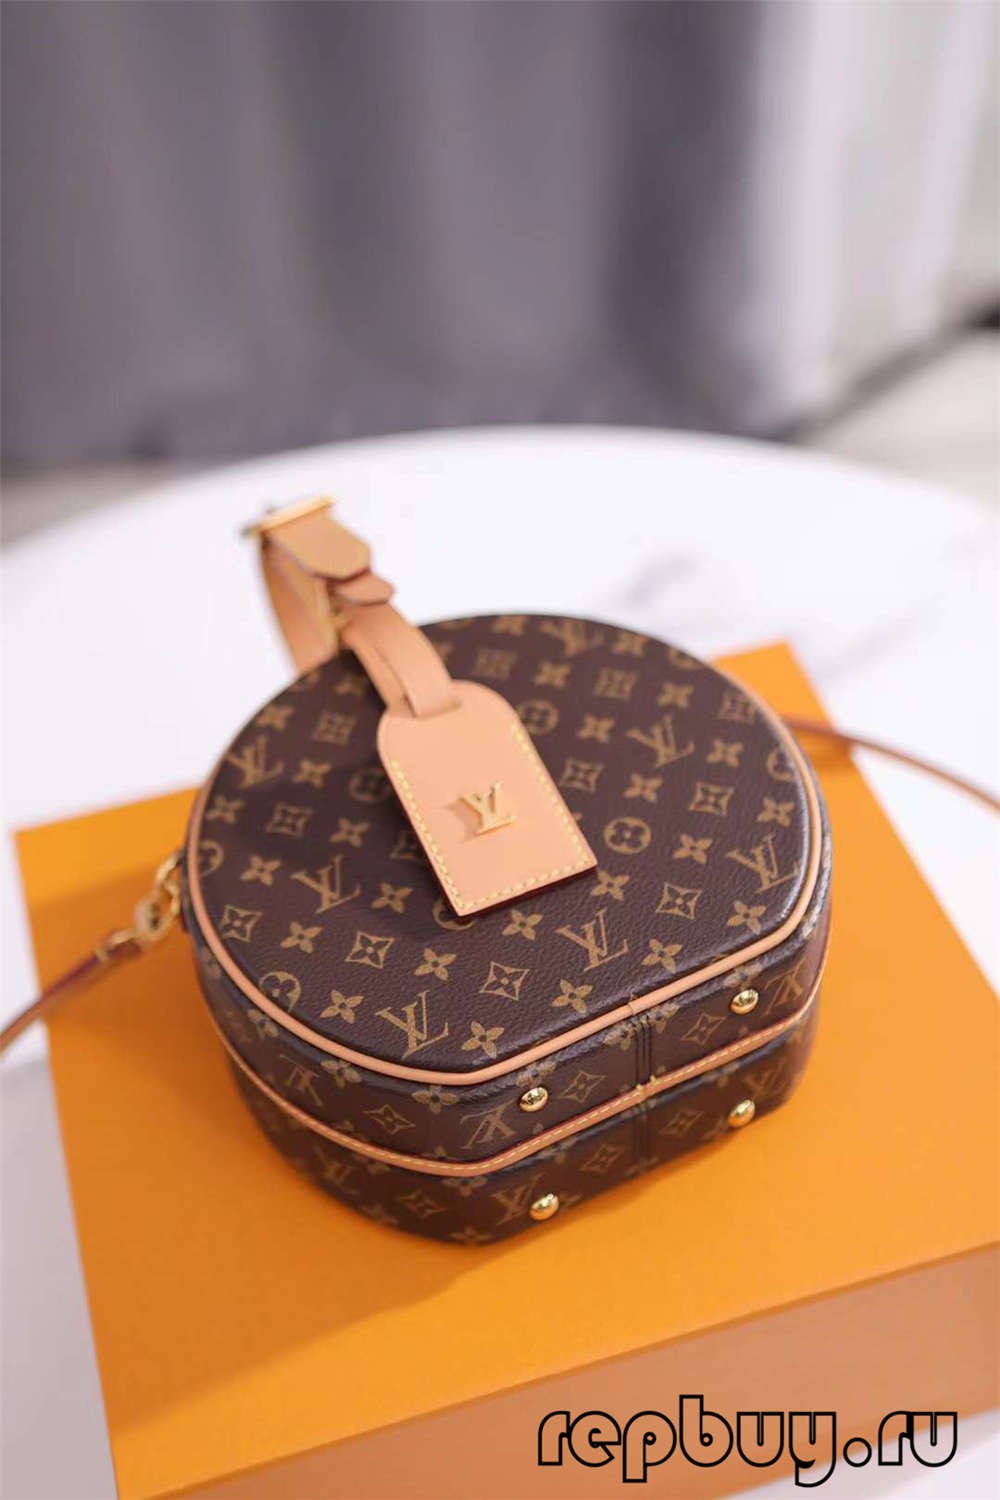 Louis Vuitton M43514 PETITE BOITE CHAPEAU 17.5cm sa itaas na mga replica na bag Mga detalye ng hardware at craft (2022 Edition)-Best Quality Fake Louis Vuitton Bag Online Store, Replica designer bag ru